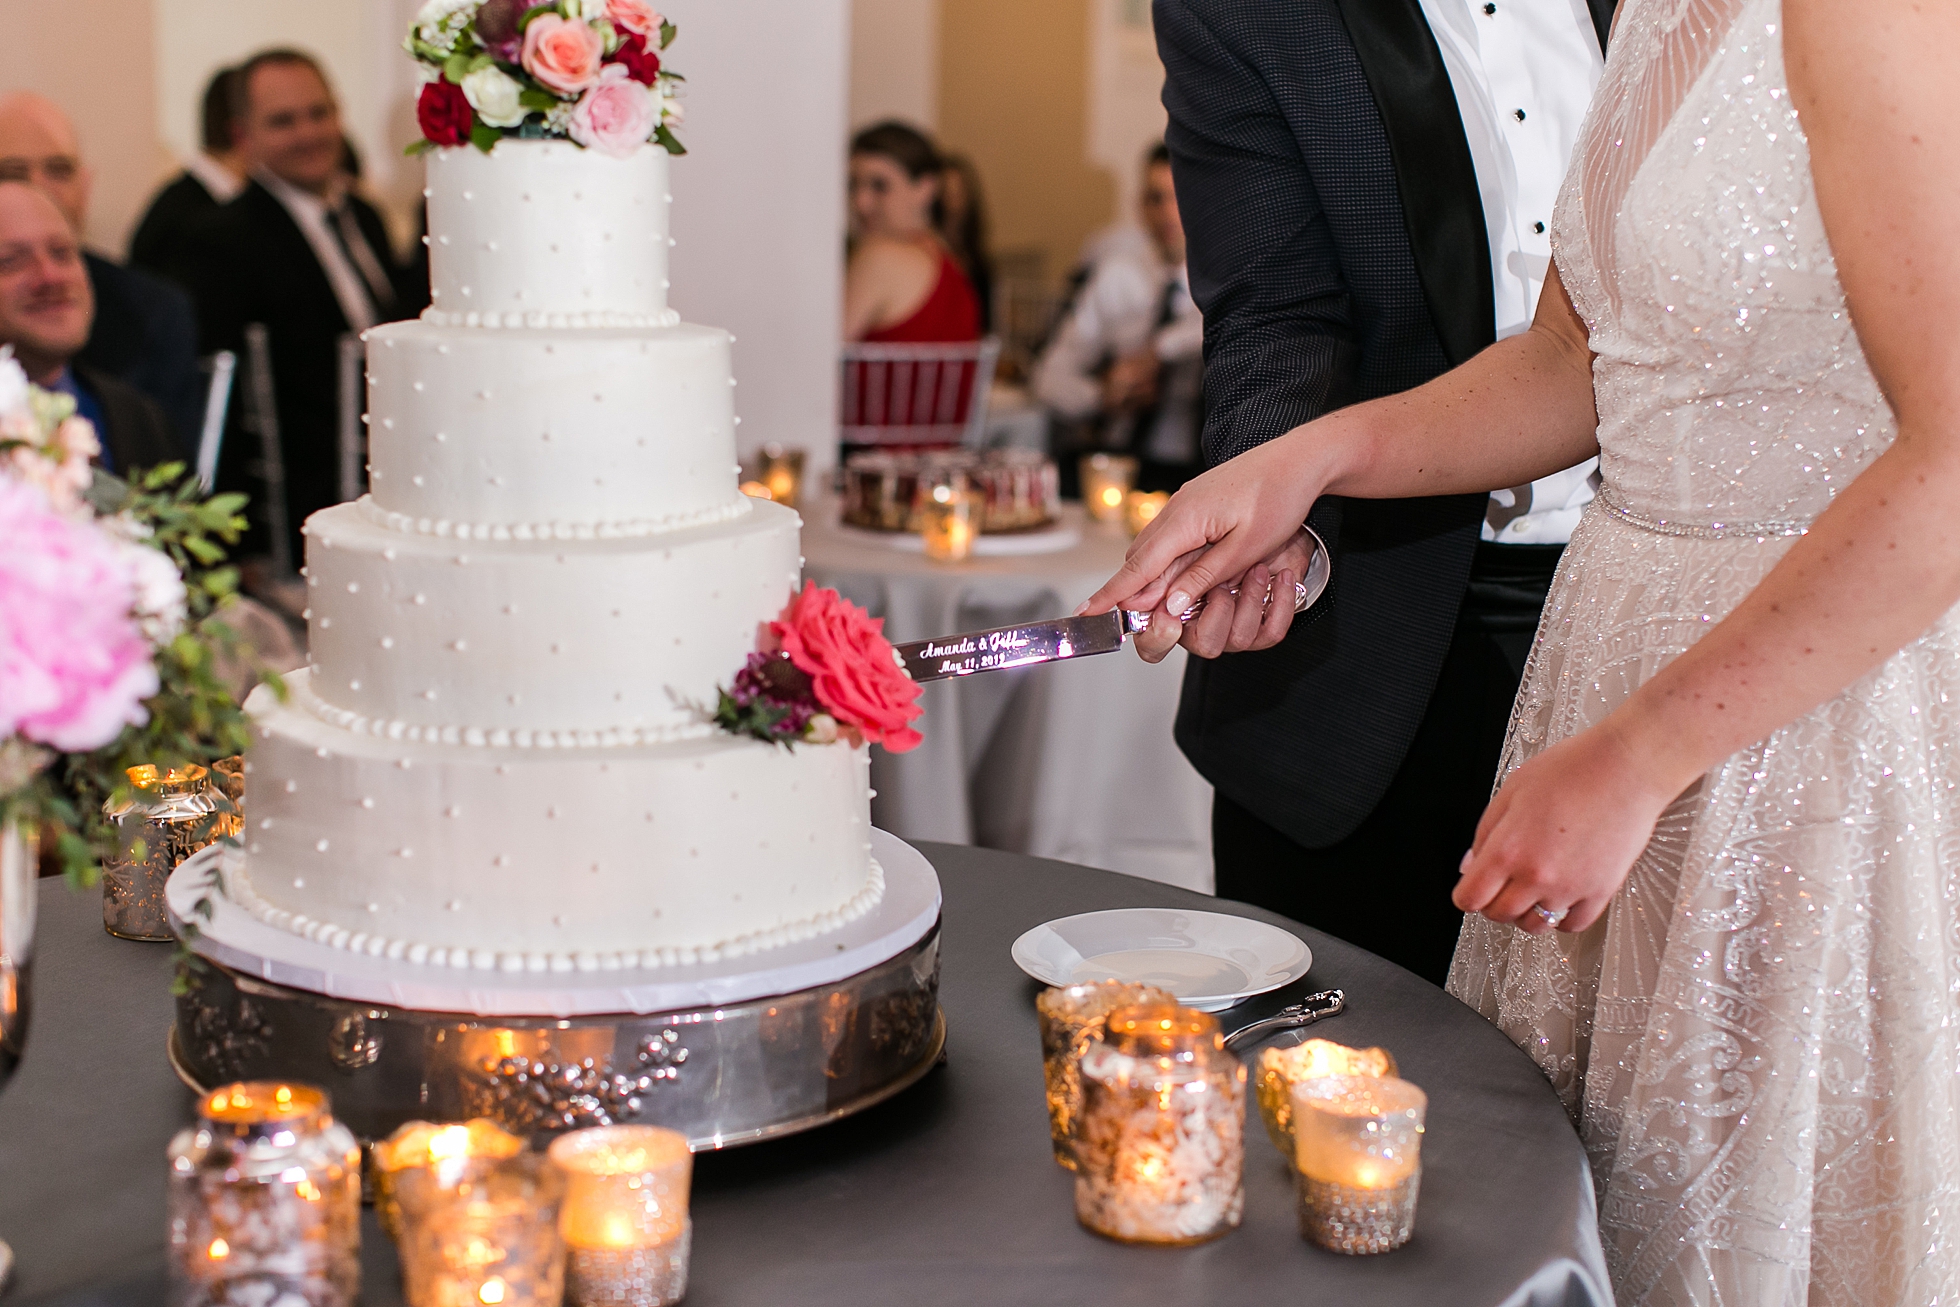 cake cutting wedding callanwolde